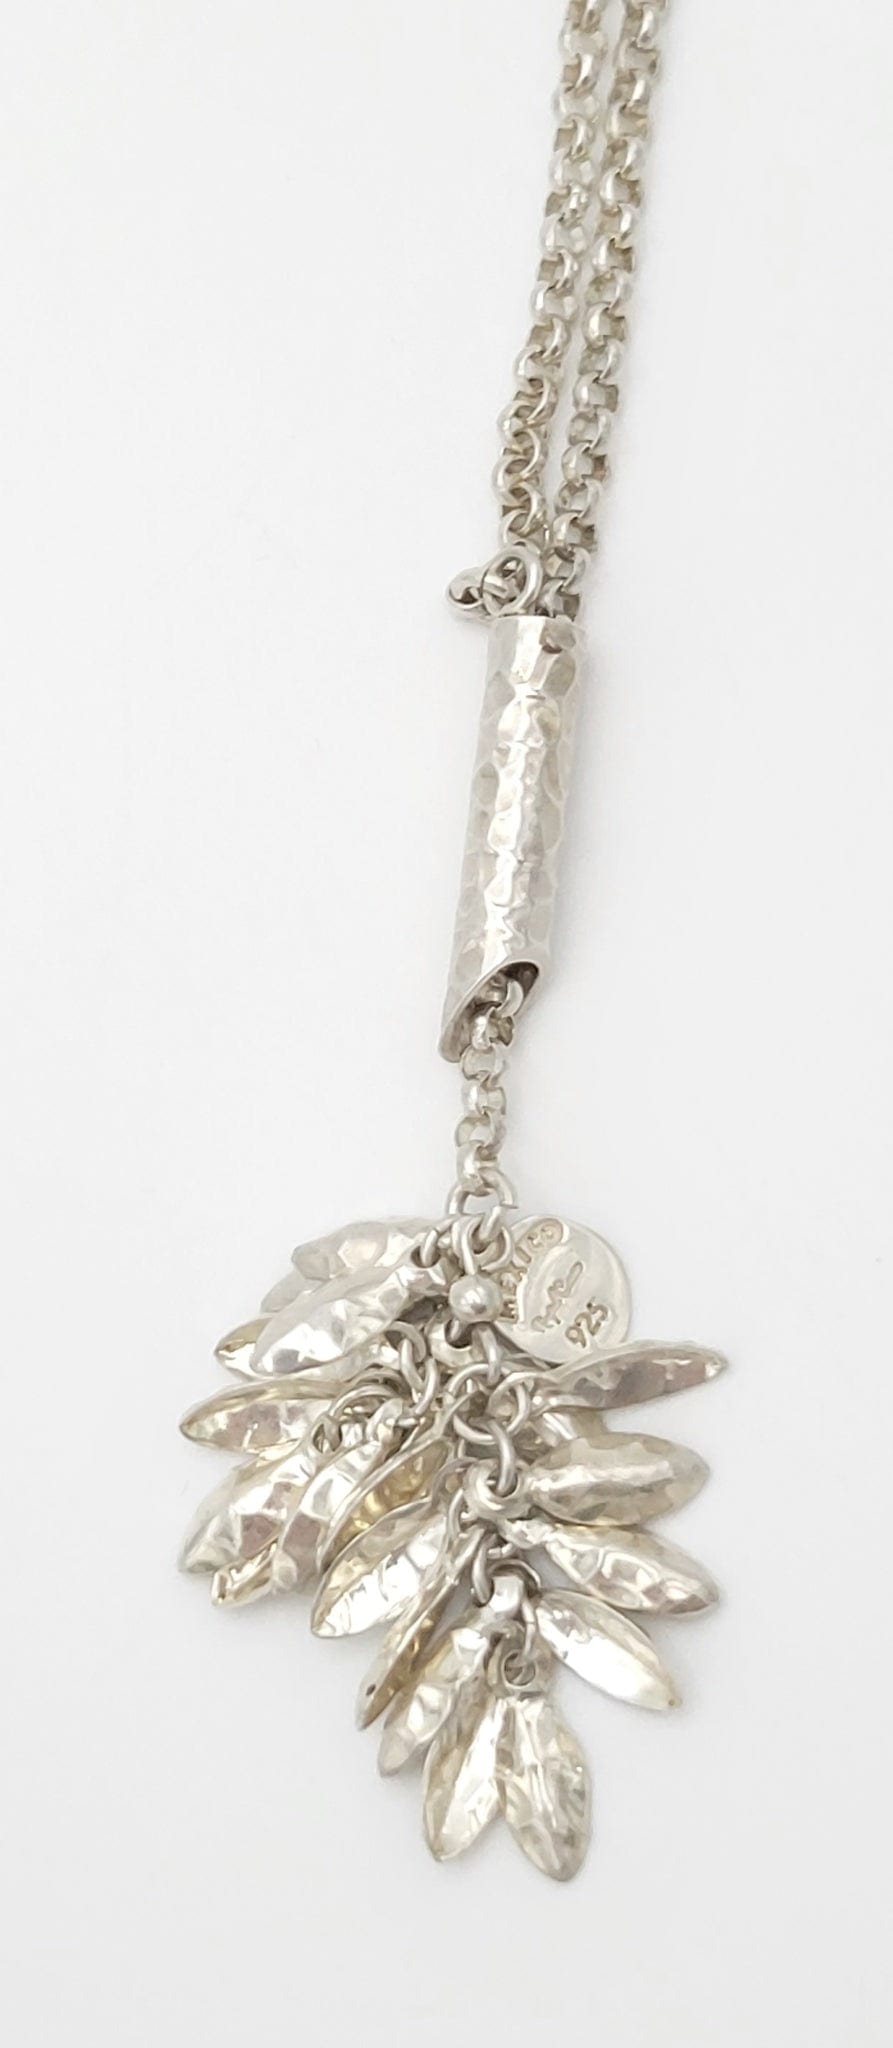 Rapul Cano Jewelry Designer Rapul Cano Mexico Artisan Sterling Modernist Lariat Tassel Necklace